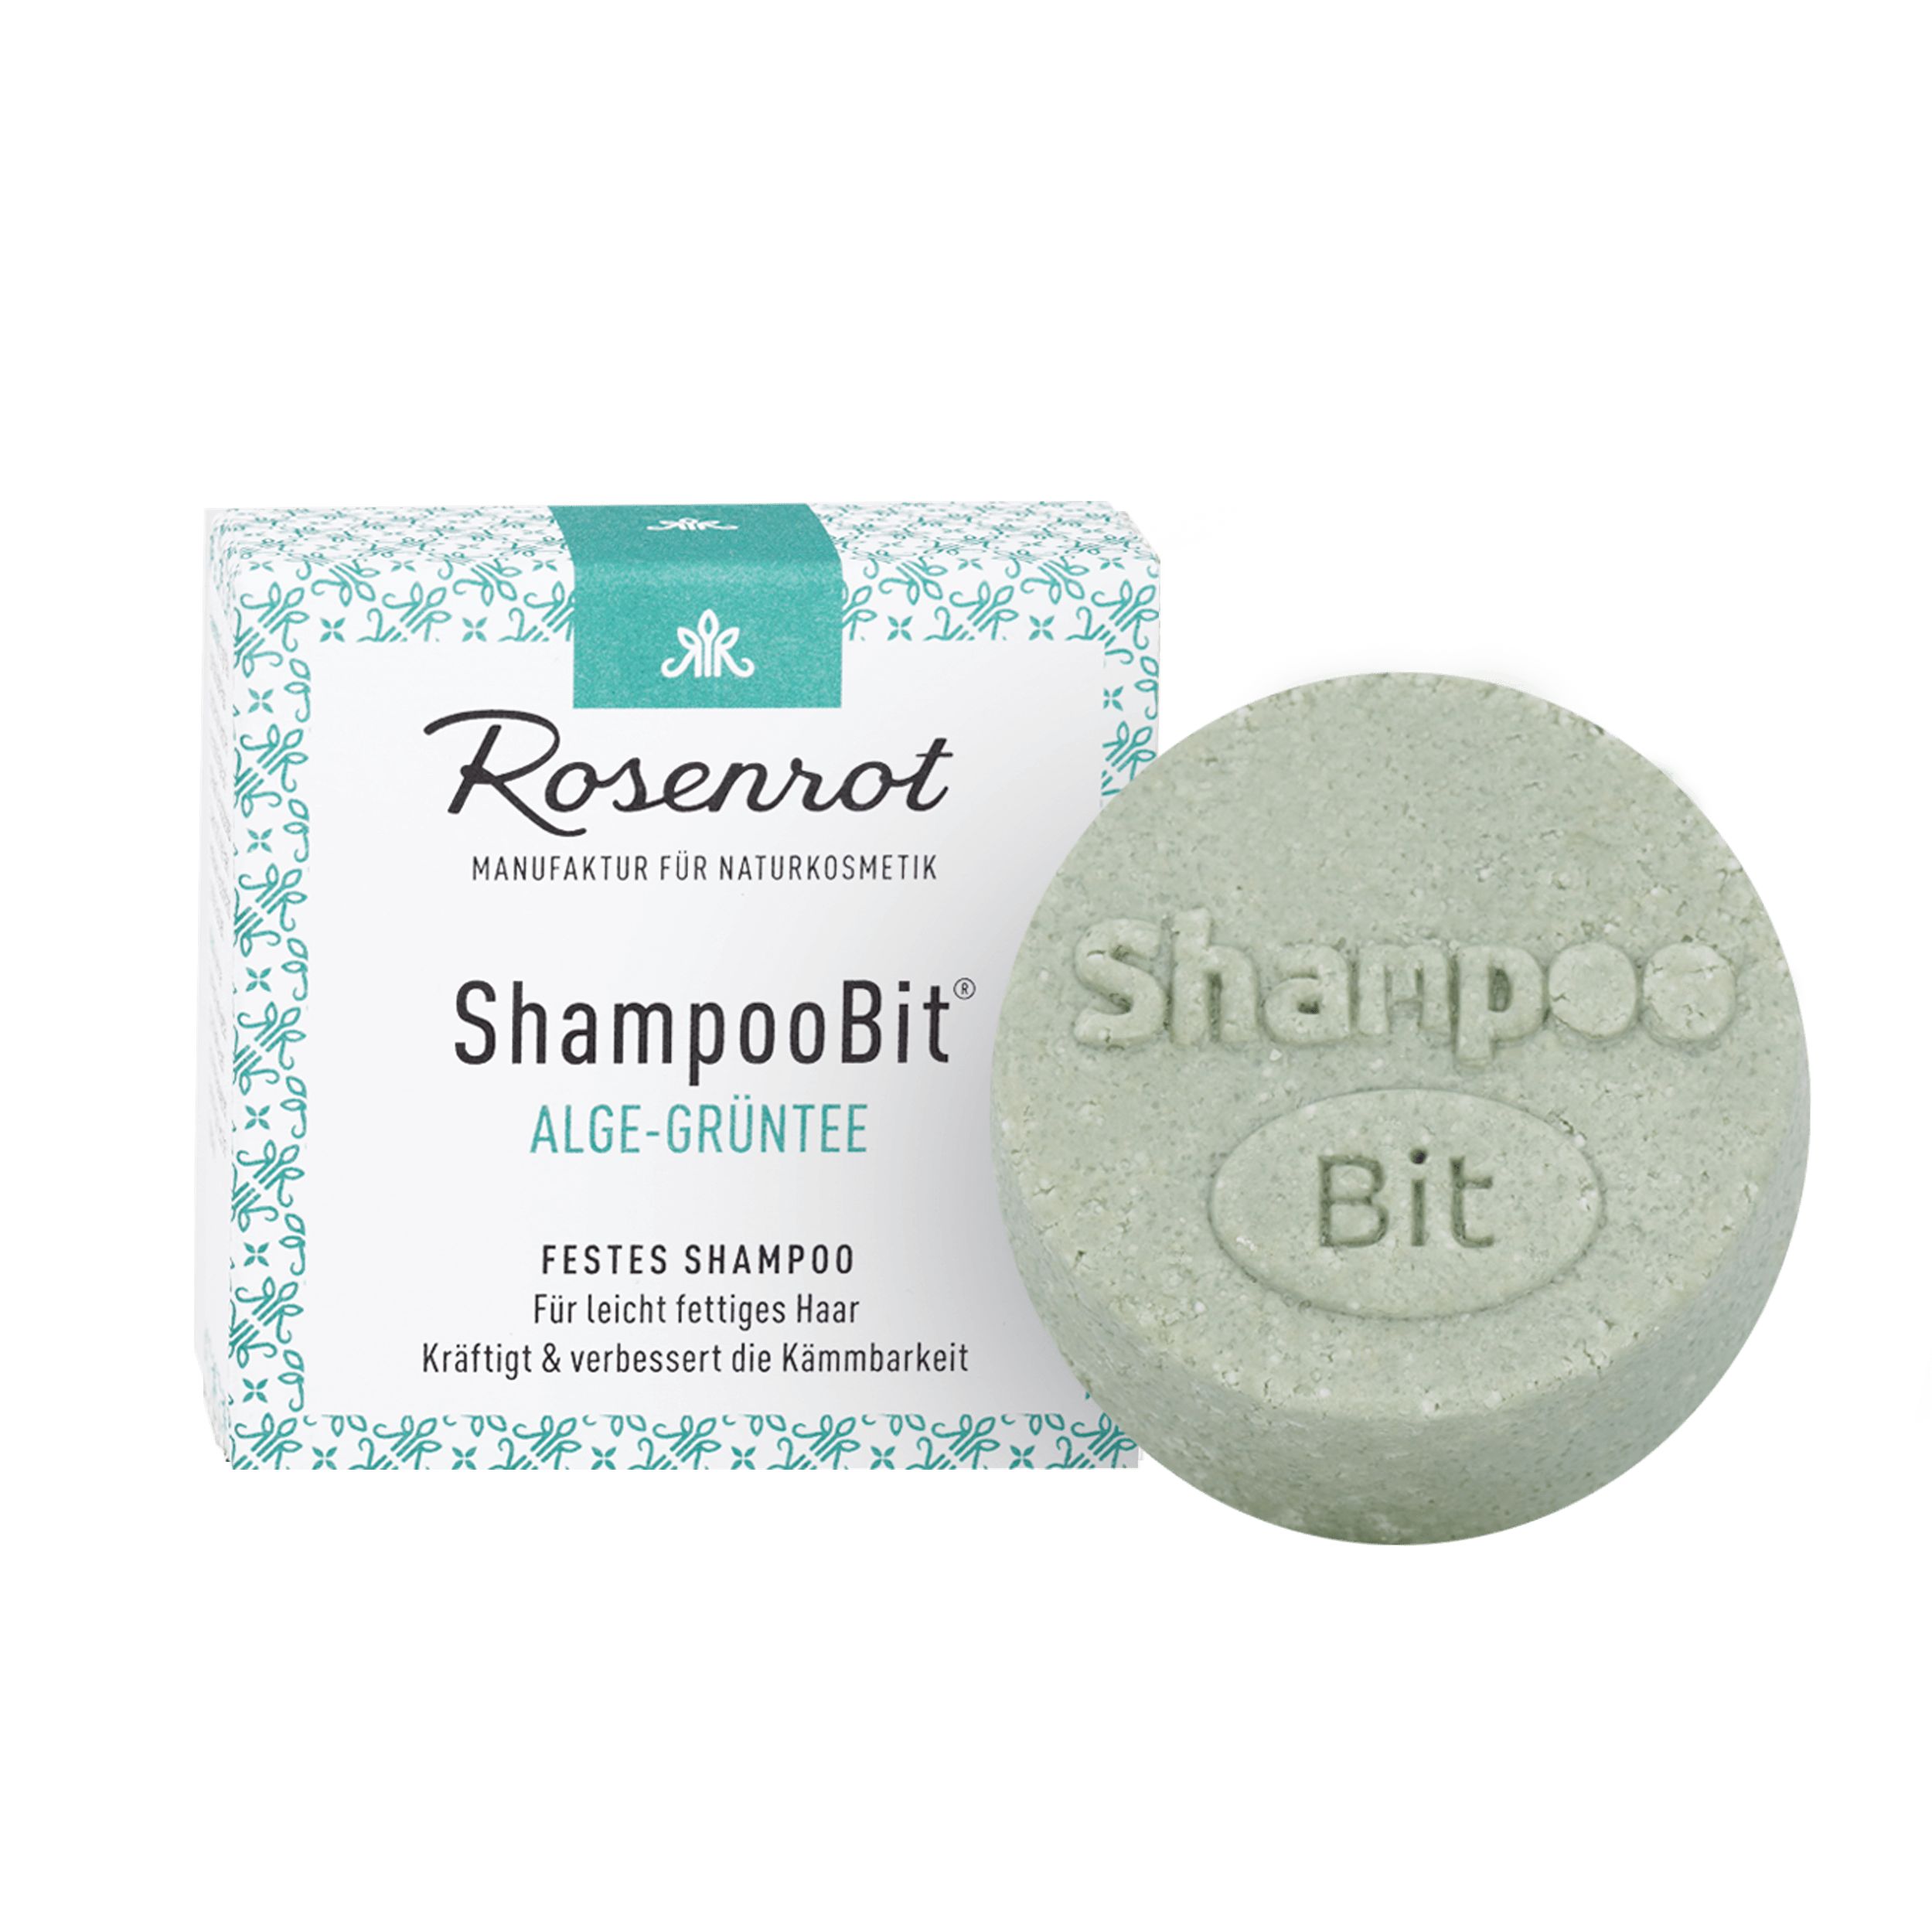 Rosenrot Naturkosmetik - ShampooBit® - festes Shampoo Alge-Grüntee